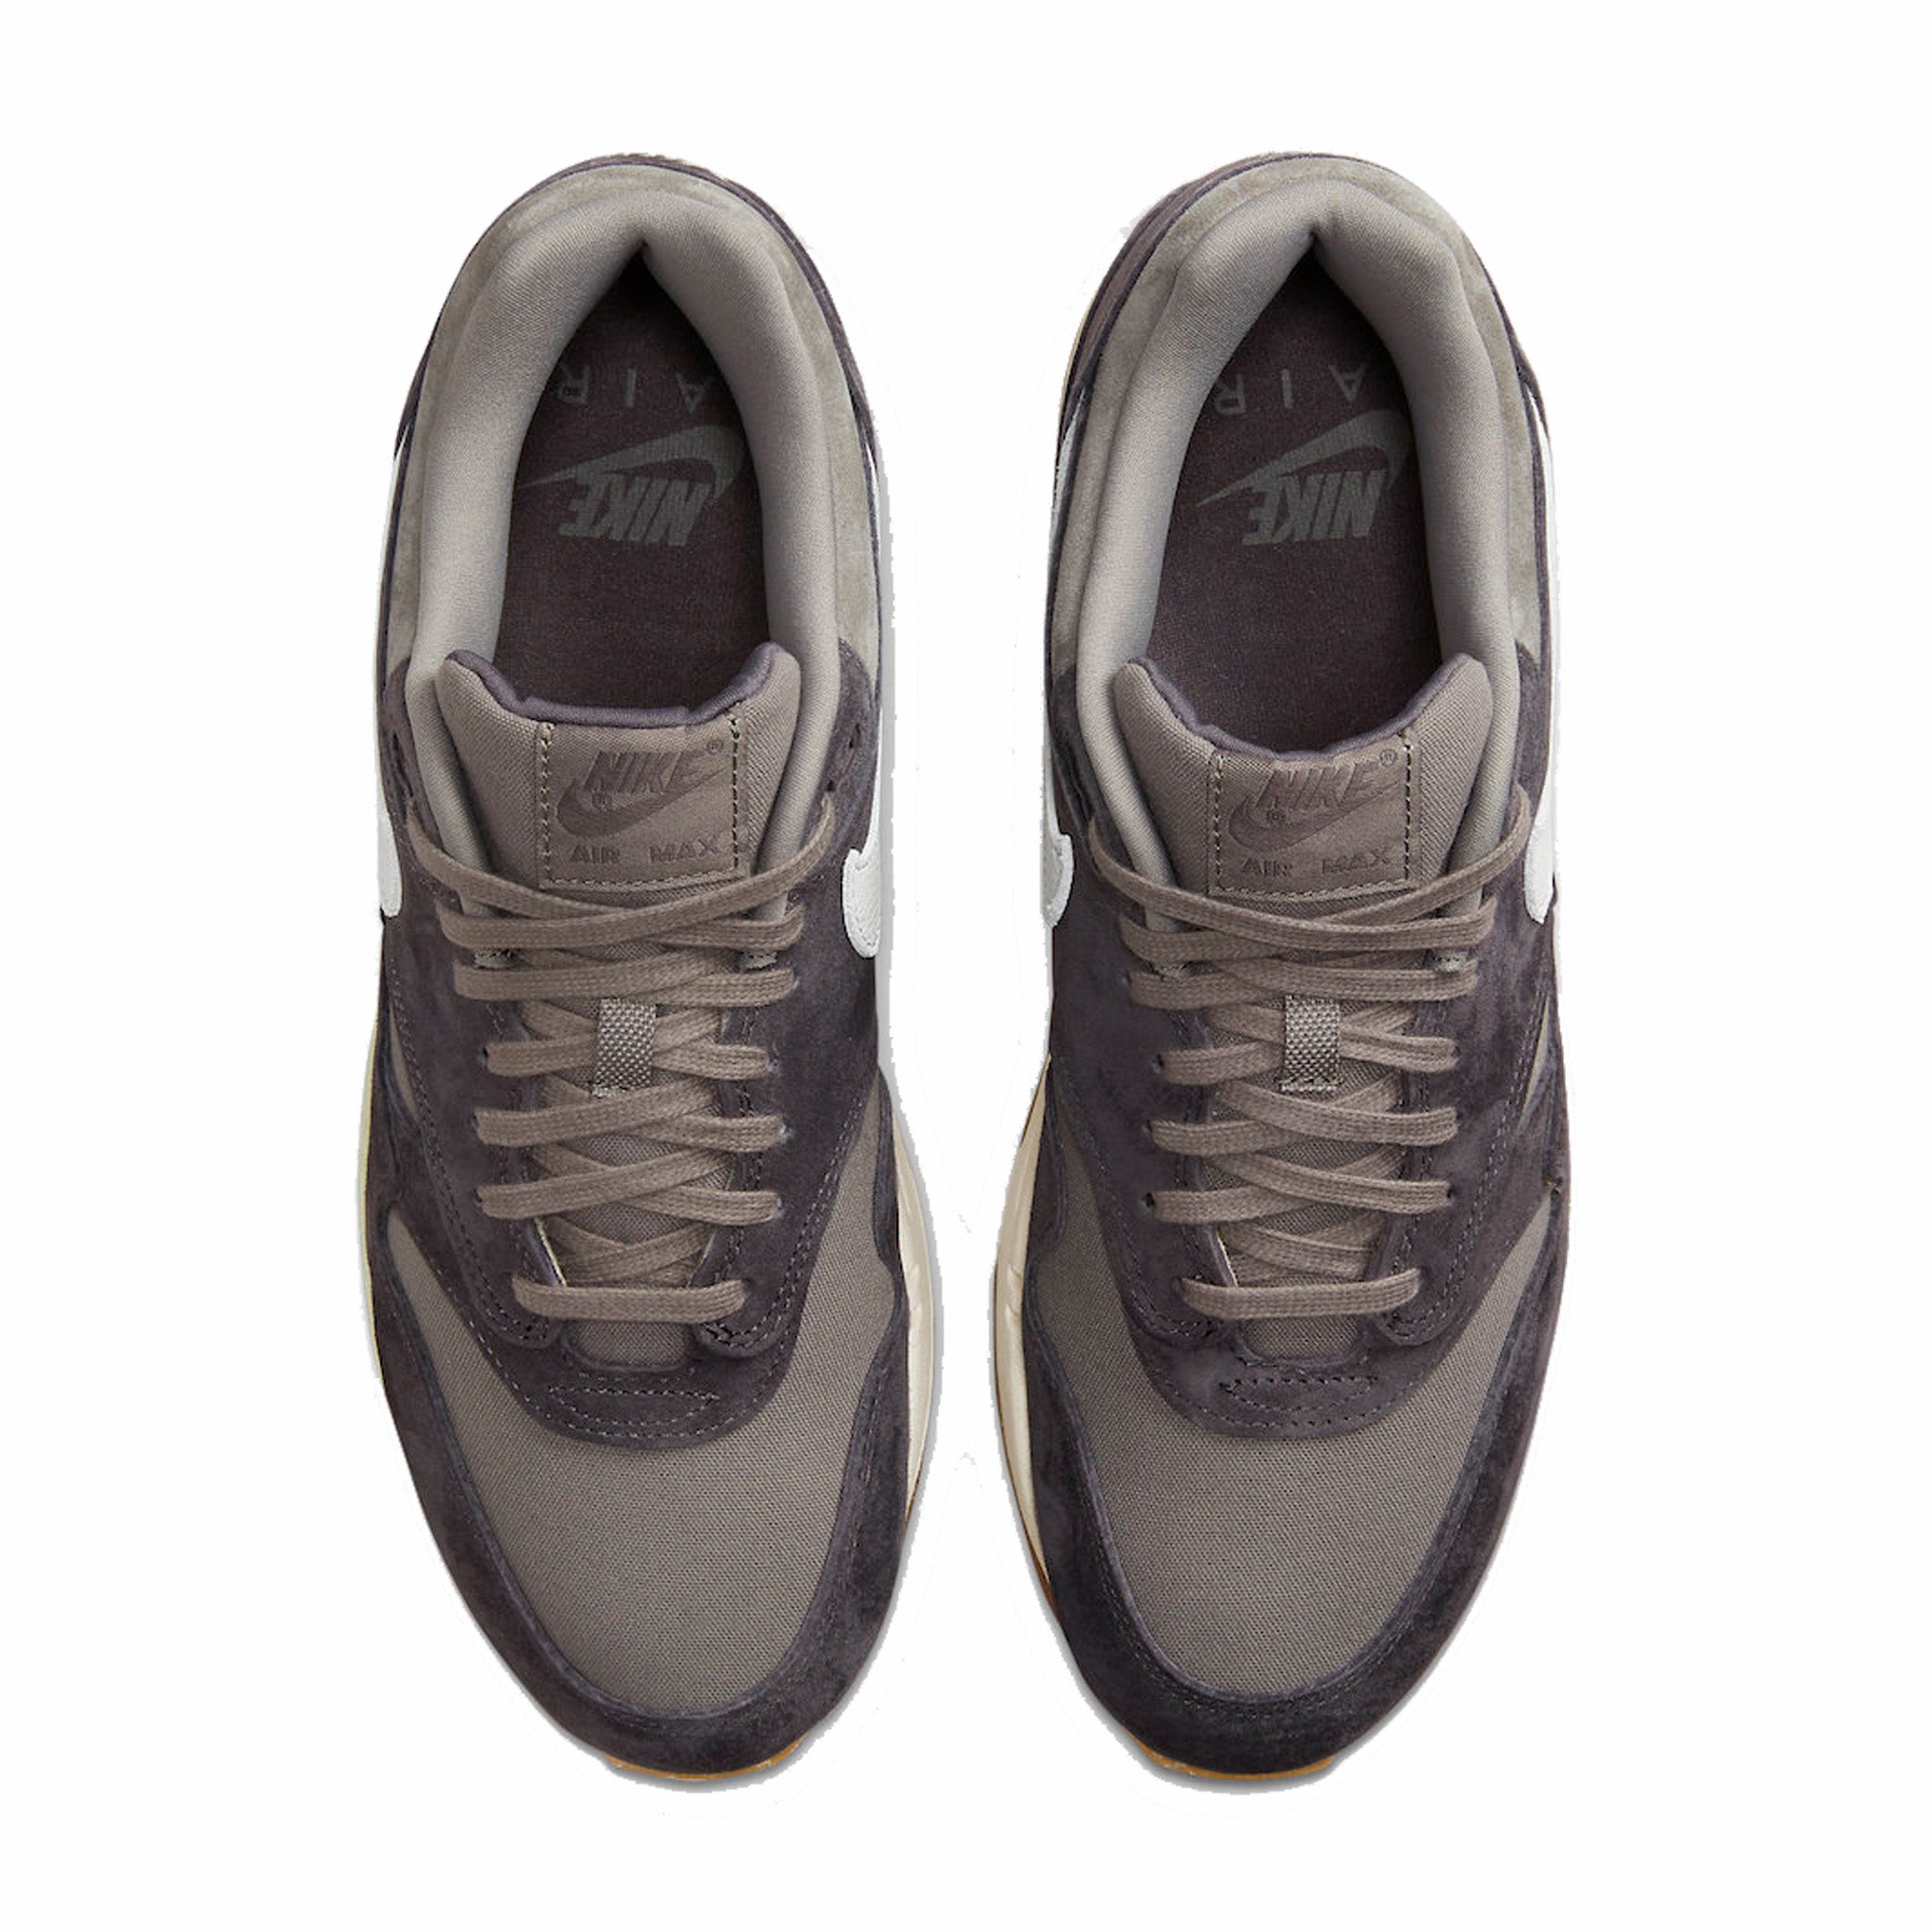 Nike Air Max 1 PRM Crepe “Soft Grey” (Soft Grey/Neutral Grey-Thunder Grey) - August Shop